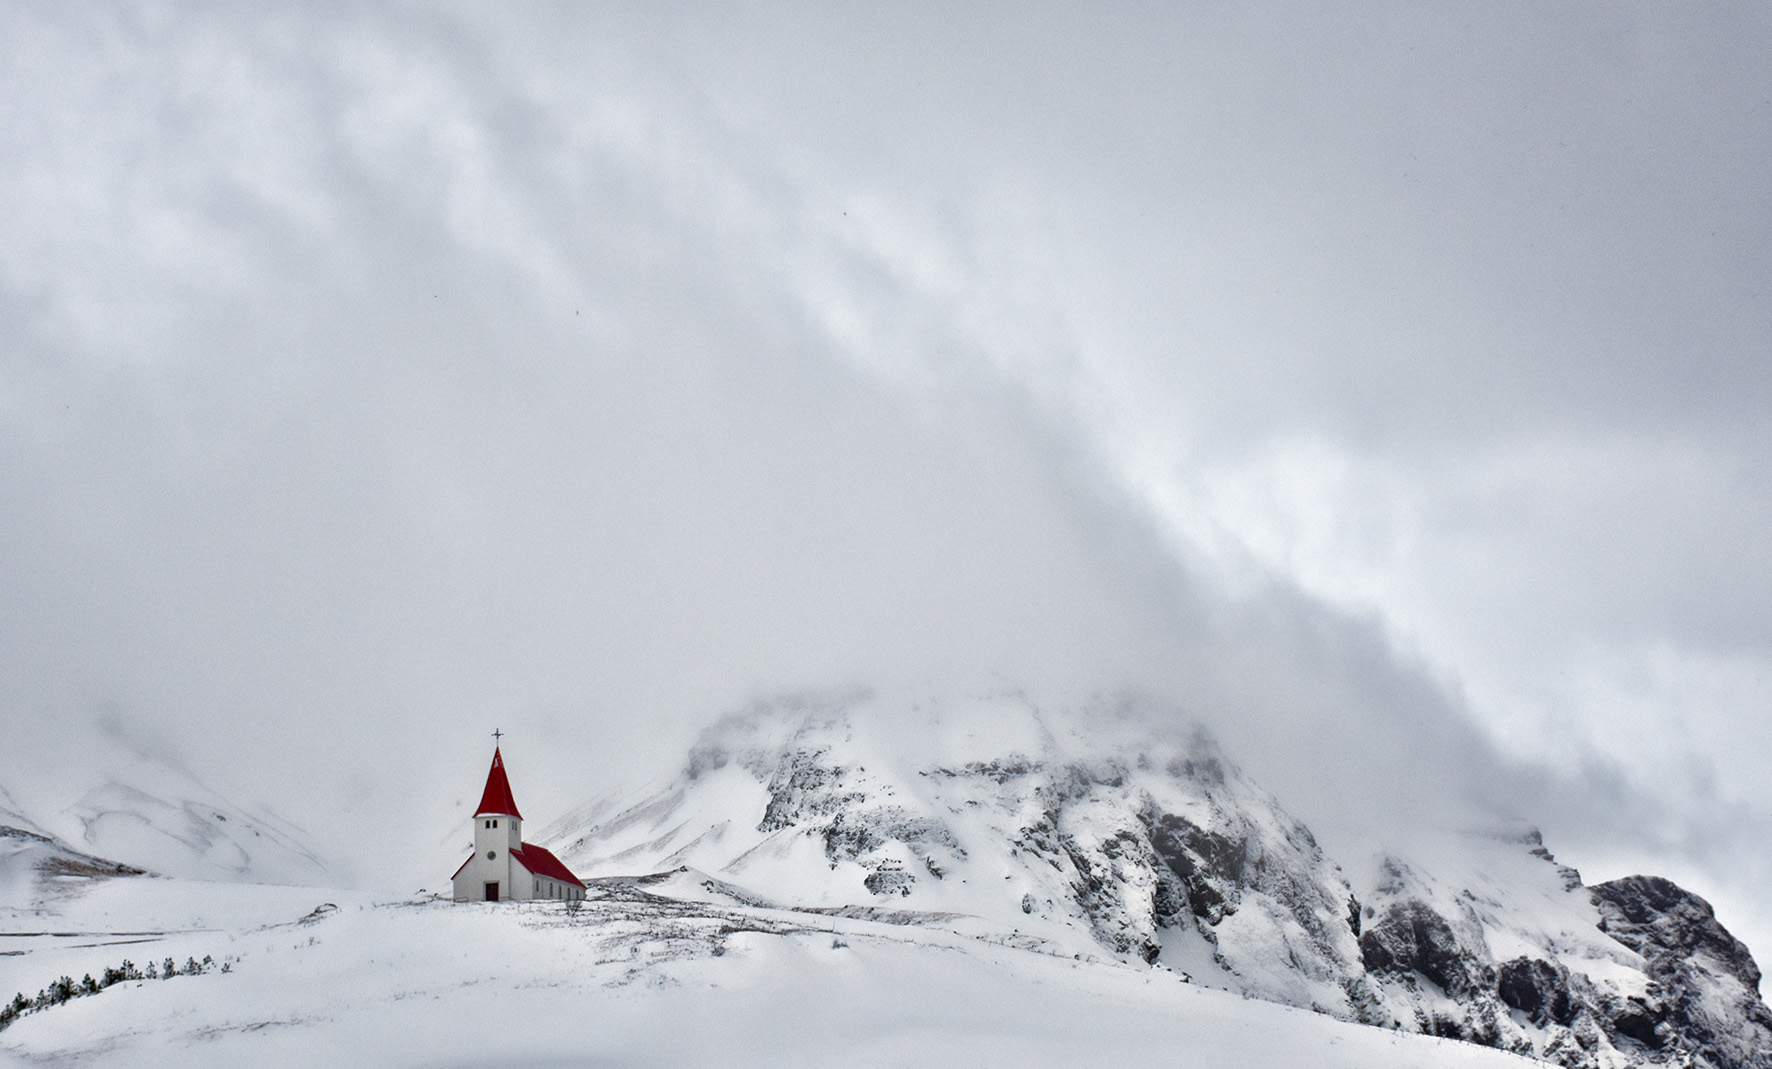 Het kerkje in Vík IJsland in een sneeuwstrorm